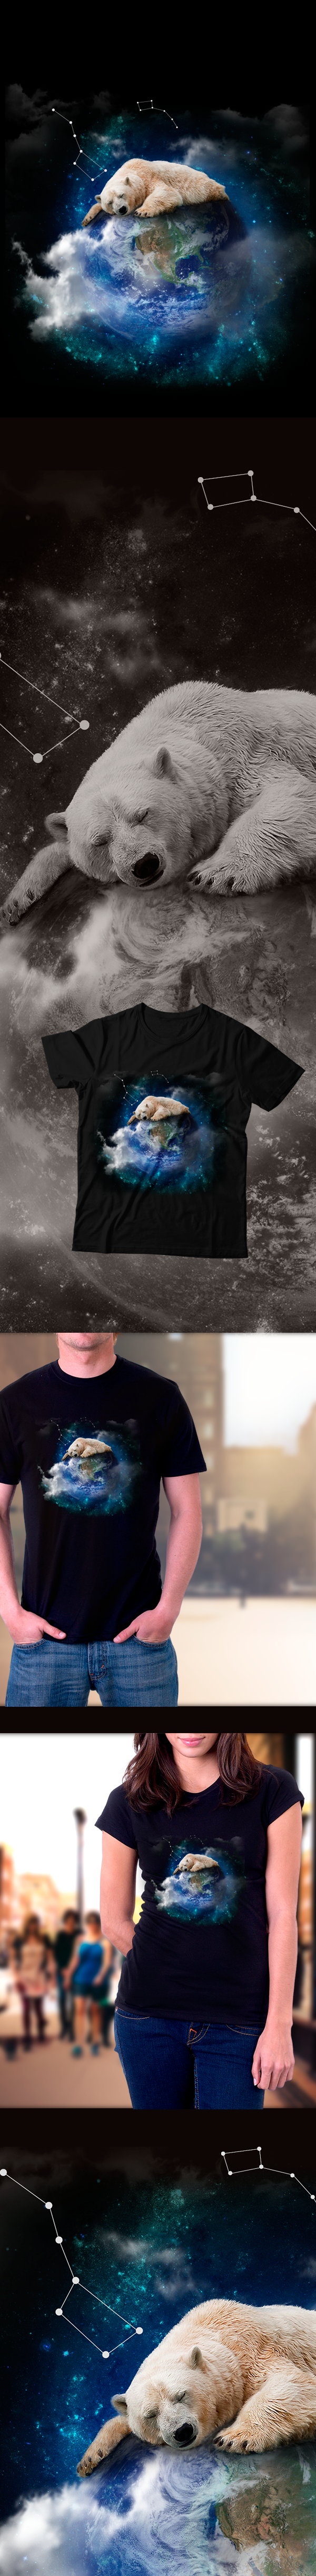 oso polar universe bear cosmic t-shirt cloud photoshop Fotomontaje